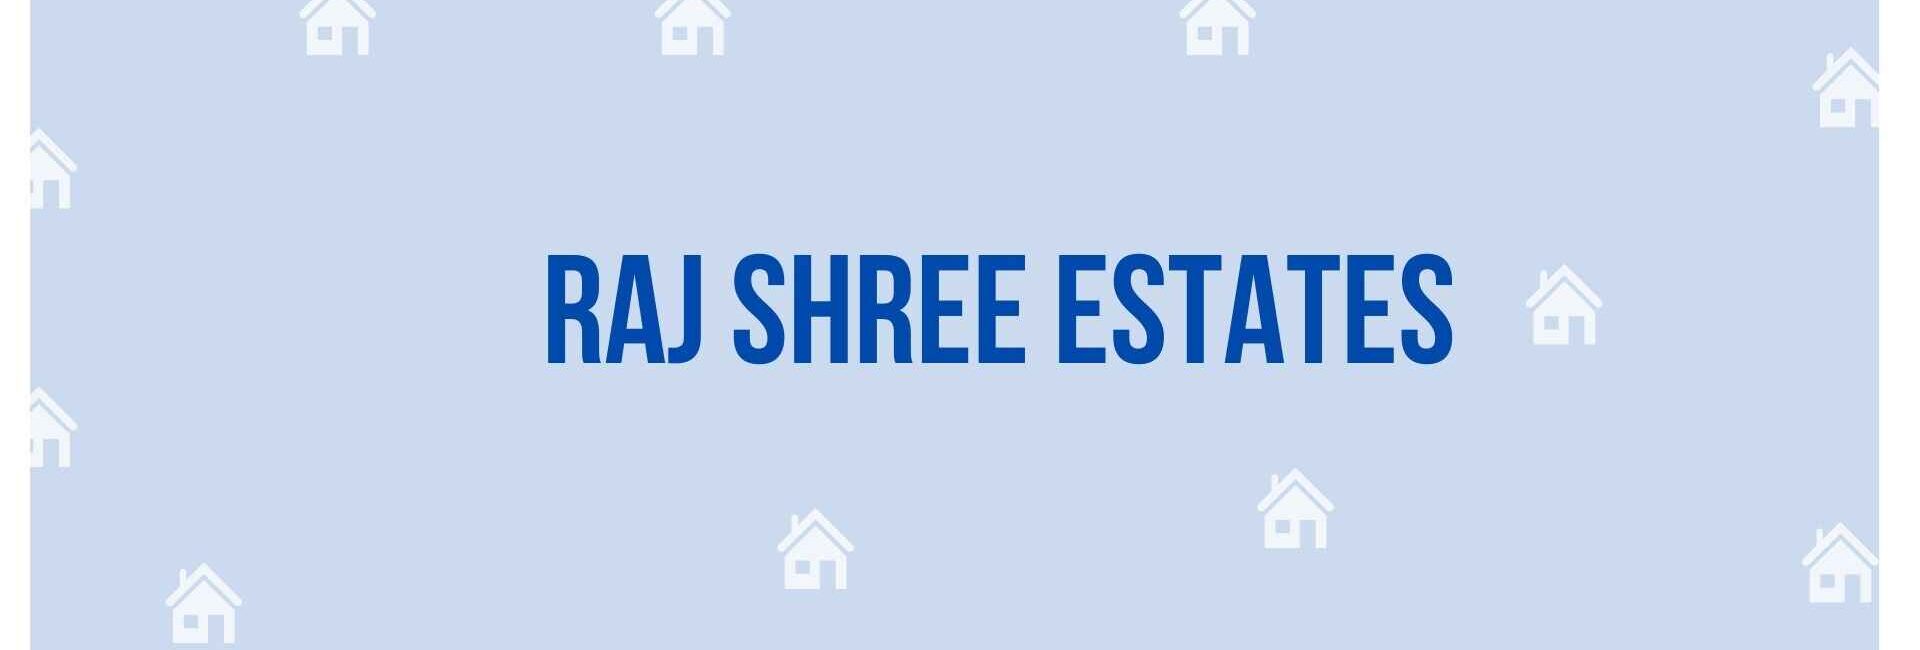 Raj Shree Estates - Property Dealer in Noida